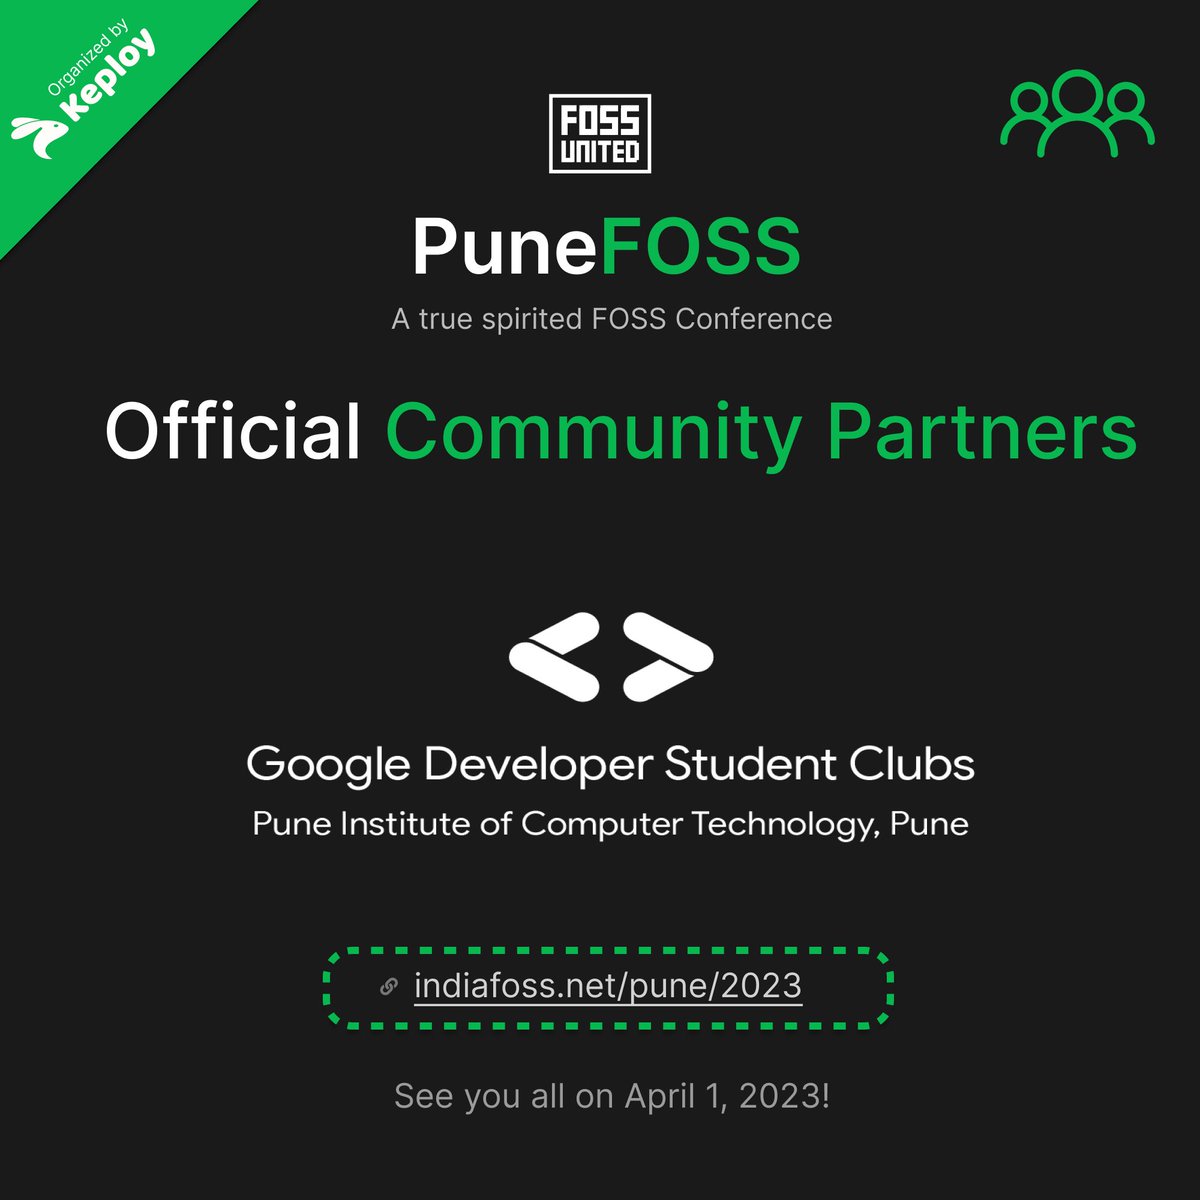 GDSC PICT, Pune  🤝 PuneFOSS

@fossunited @Keployio @punefoss 
#PuneFOSS #Pune #OpenSource #fossunited #PuneFOSS2023 #FreeAndOpenSourceSoftware #gdsc #gdsc_cummins #gdsc_ghrcem #gdsc_mescoe #gdsc_pict

(5/6)